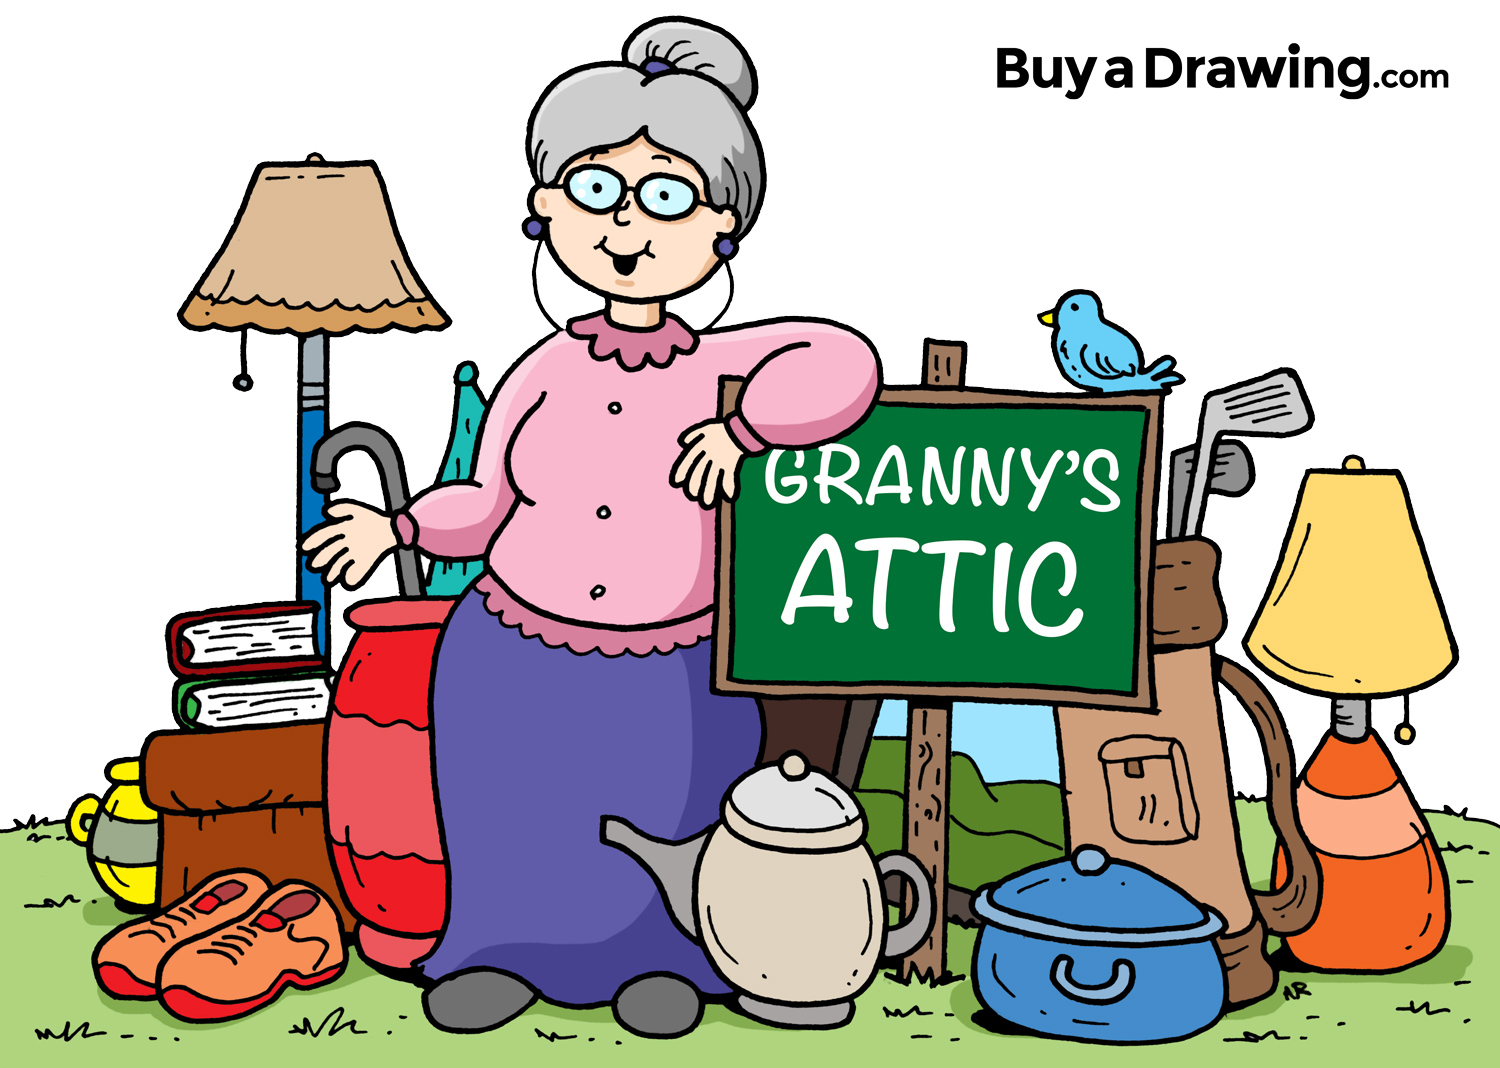 Cartoon Granny Attic and Yard Sale Drawing for Church Flyer.